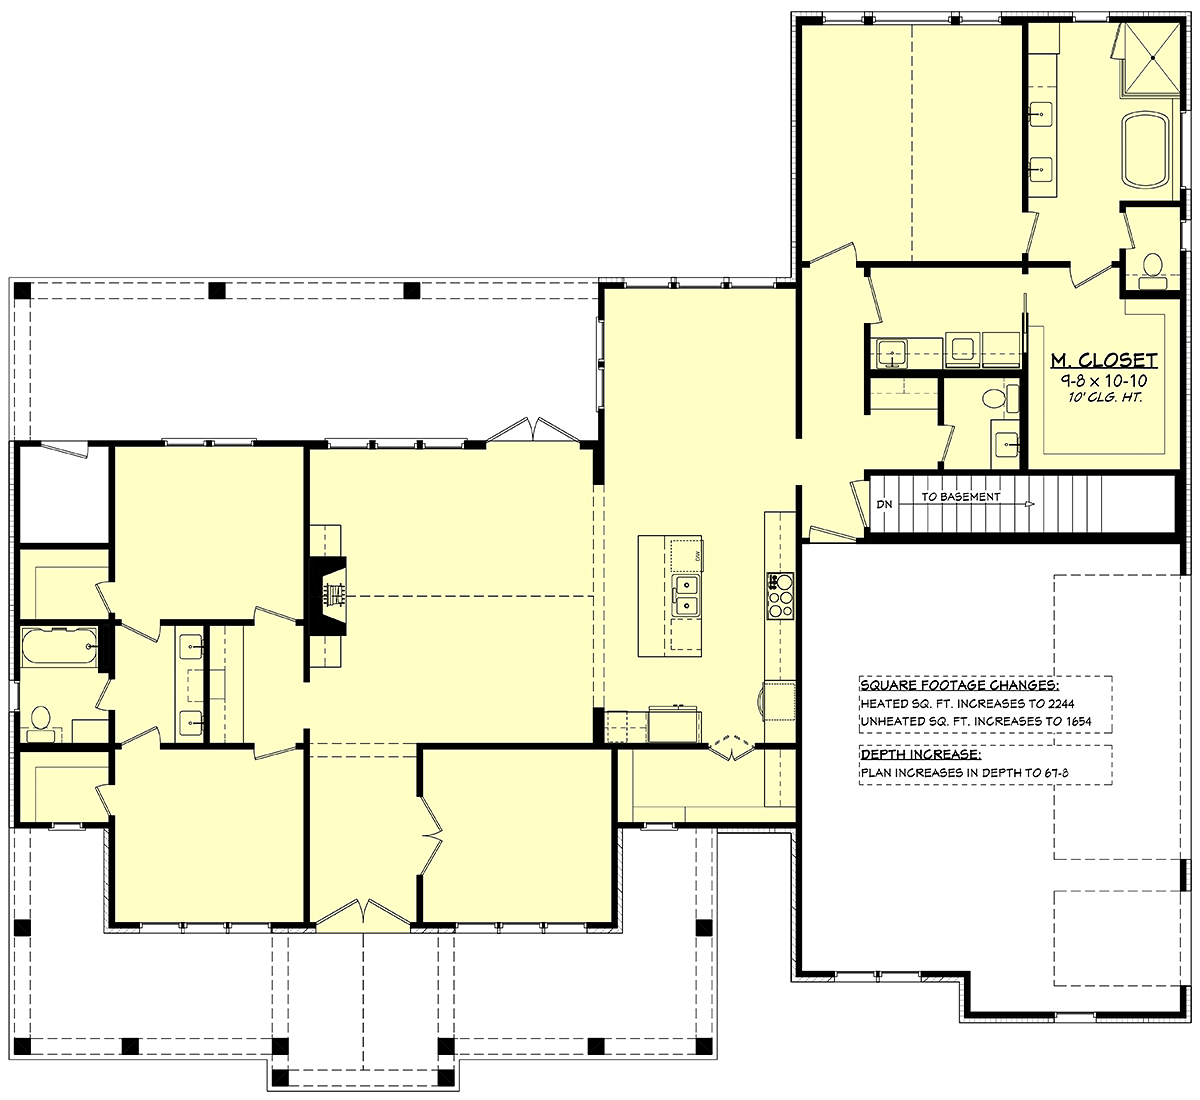 House Plan 80899 Alternate Level One